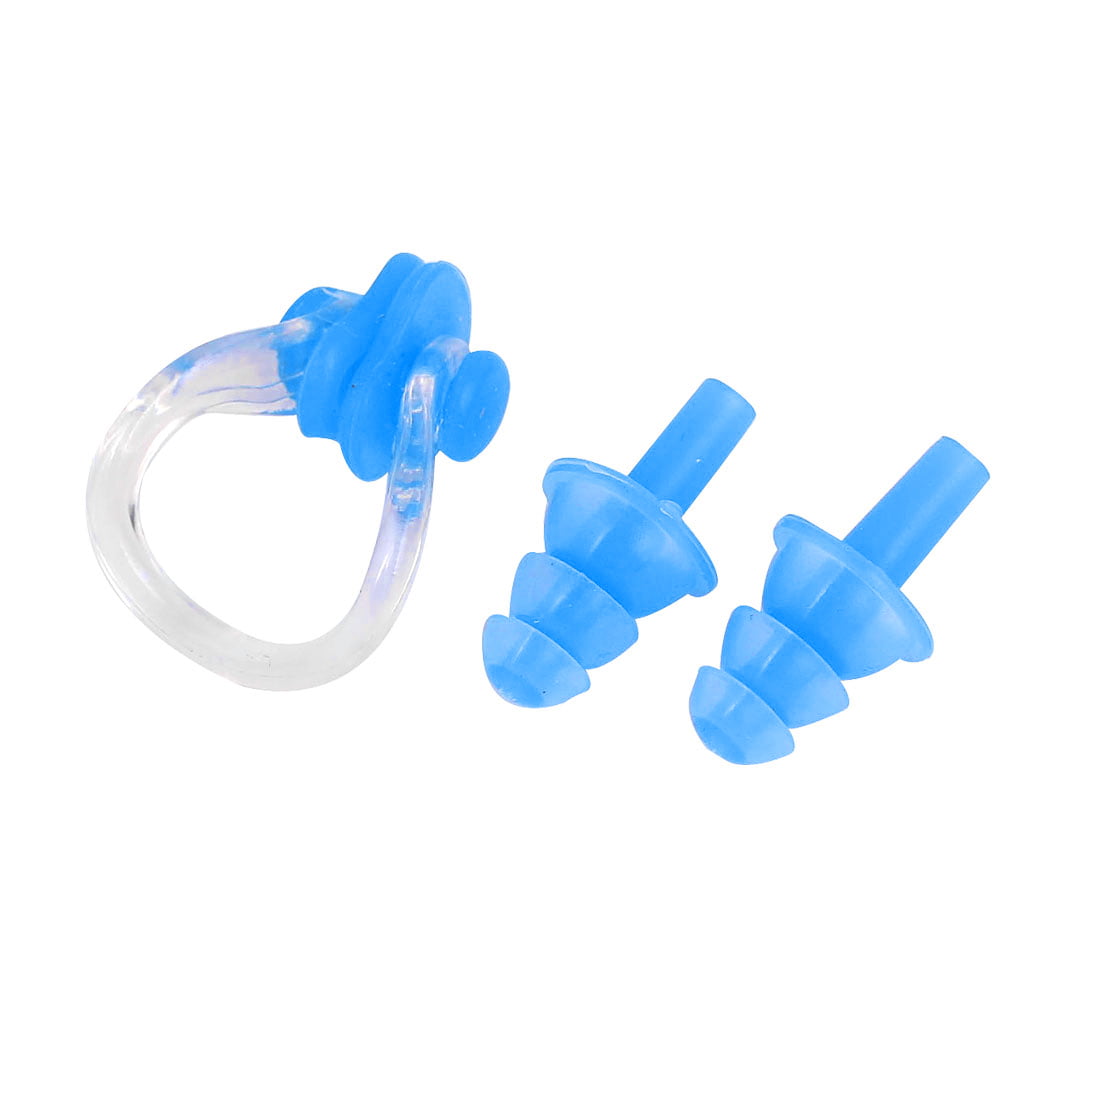 1 set waterproof soft silicone swimming set nose clips ear plug earplugs toolscb